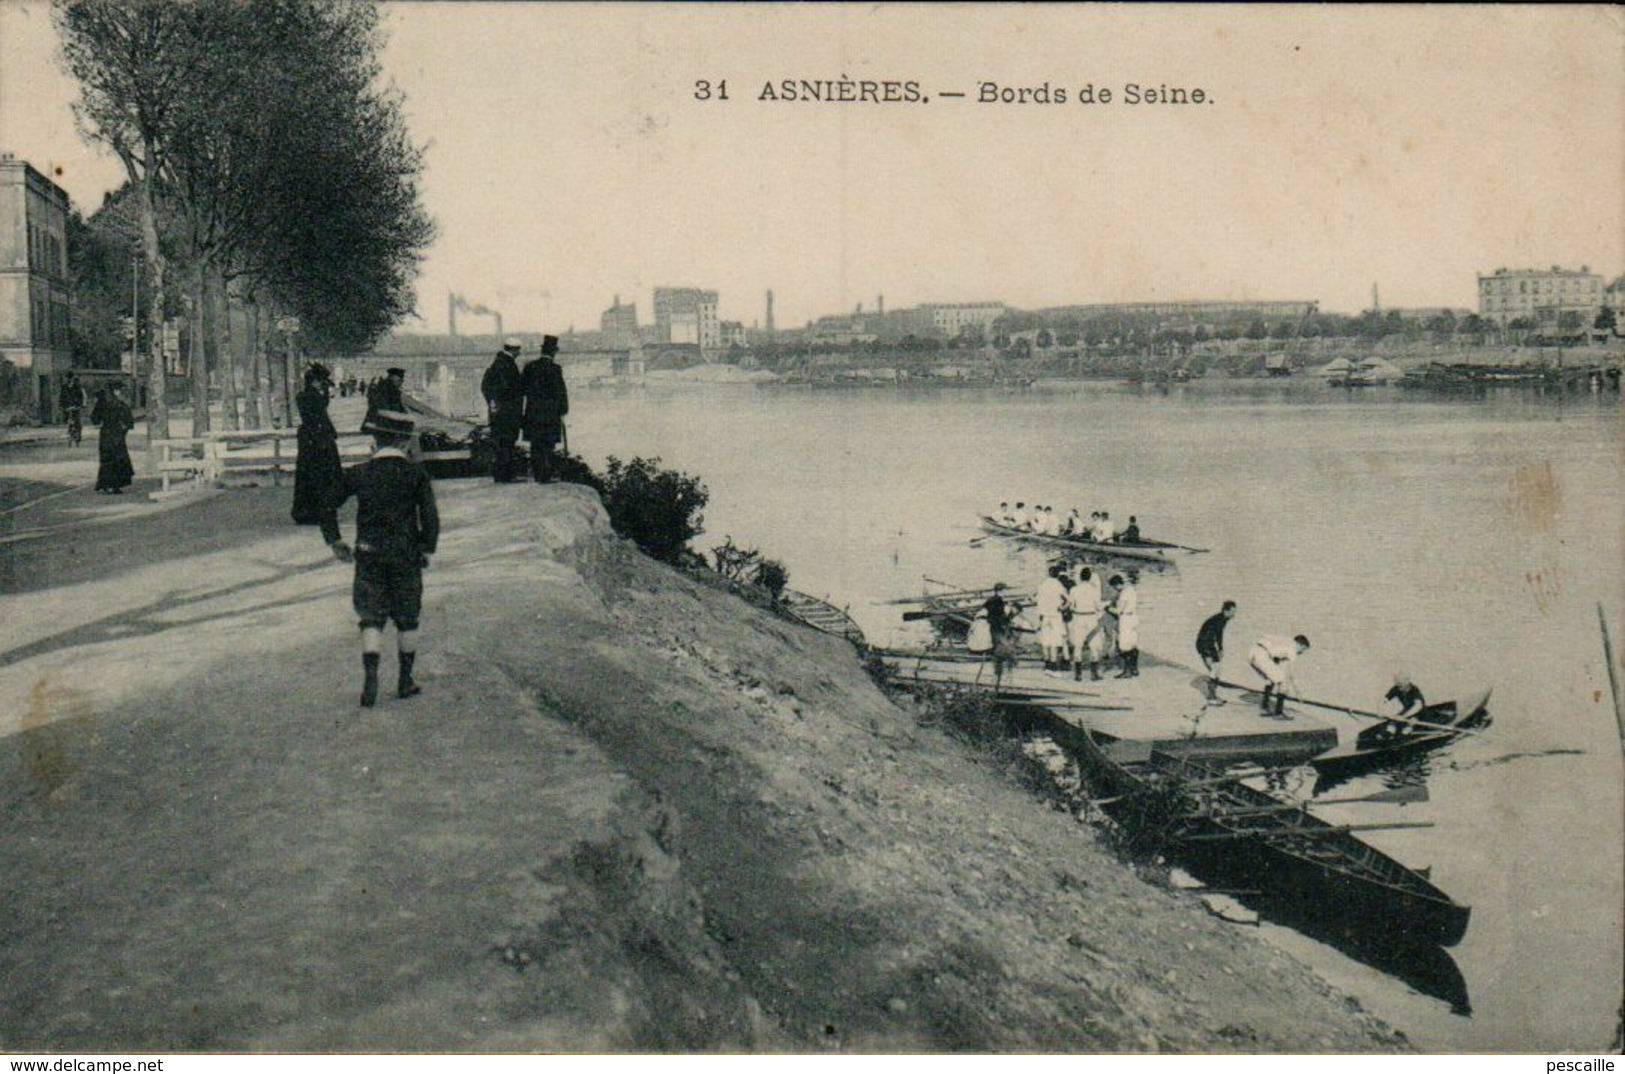 92 HAUTS DE SEINE - CP ANIMEE ASNIERES - BORDS DE SEINE - MURHAUSER ?? EDIT. PARIS N° 31 - CIRCULEE EN 1907 - Asnieres Sur Seine